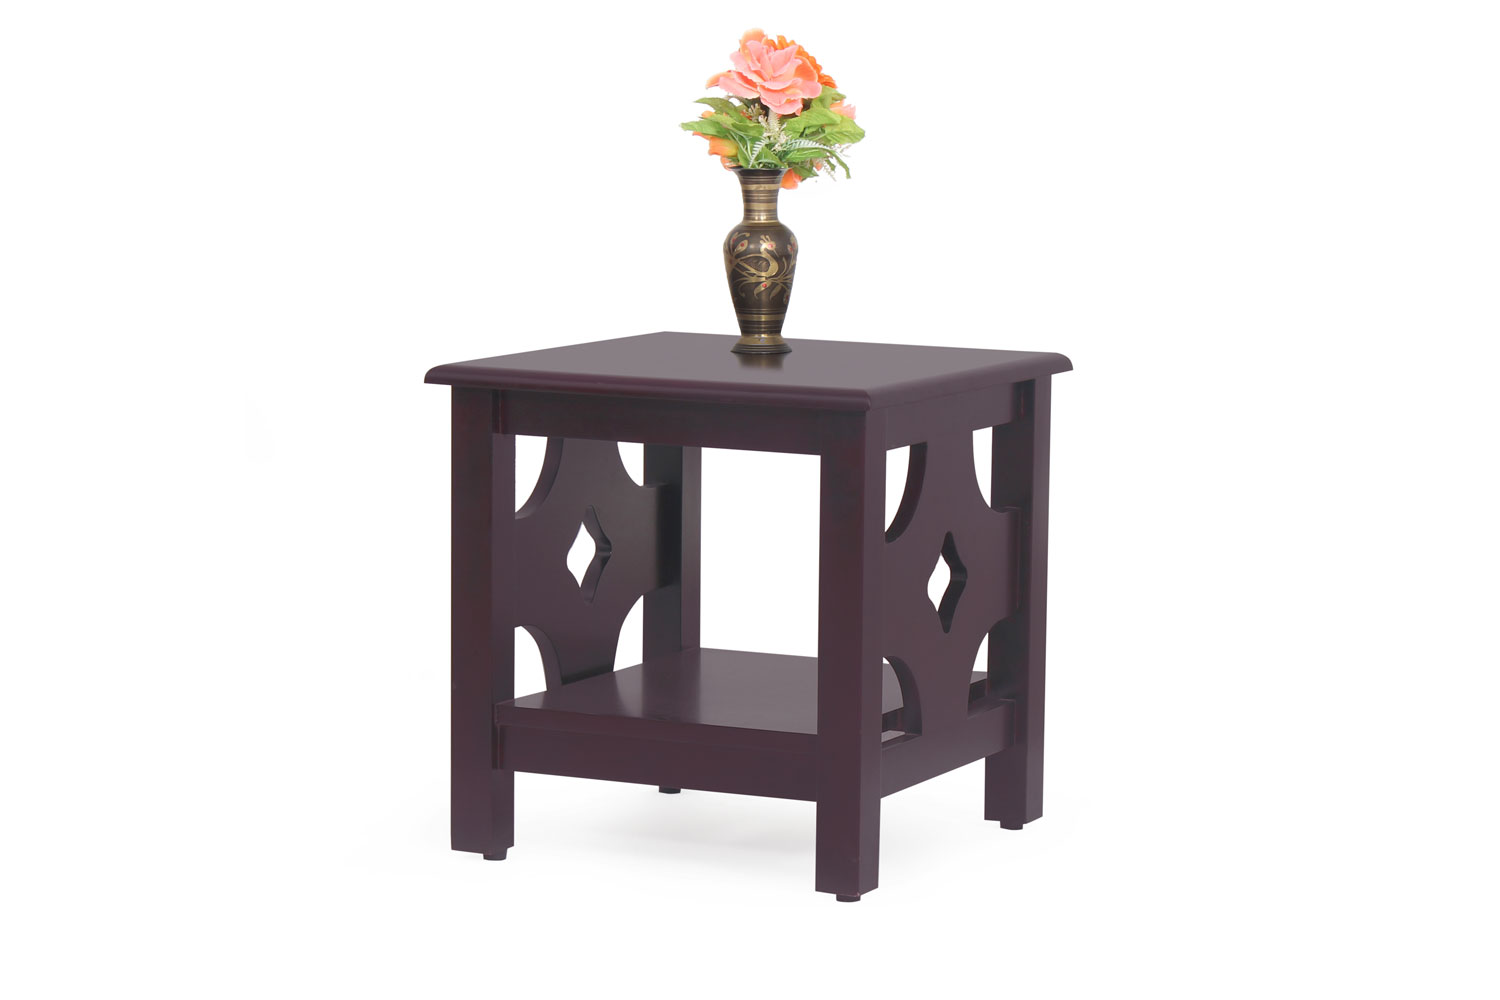 oak side table in solid wood finish